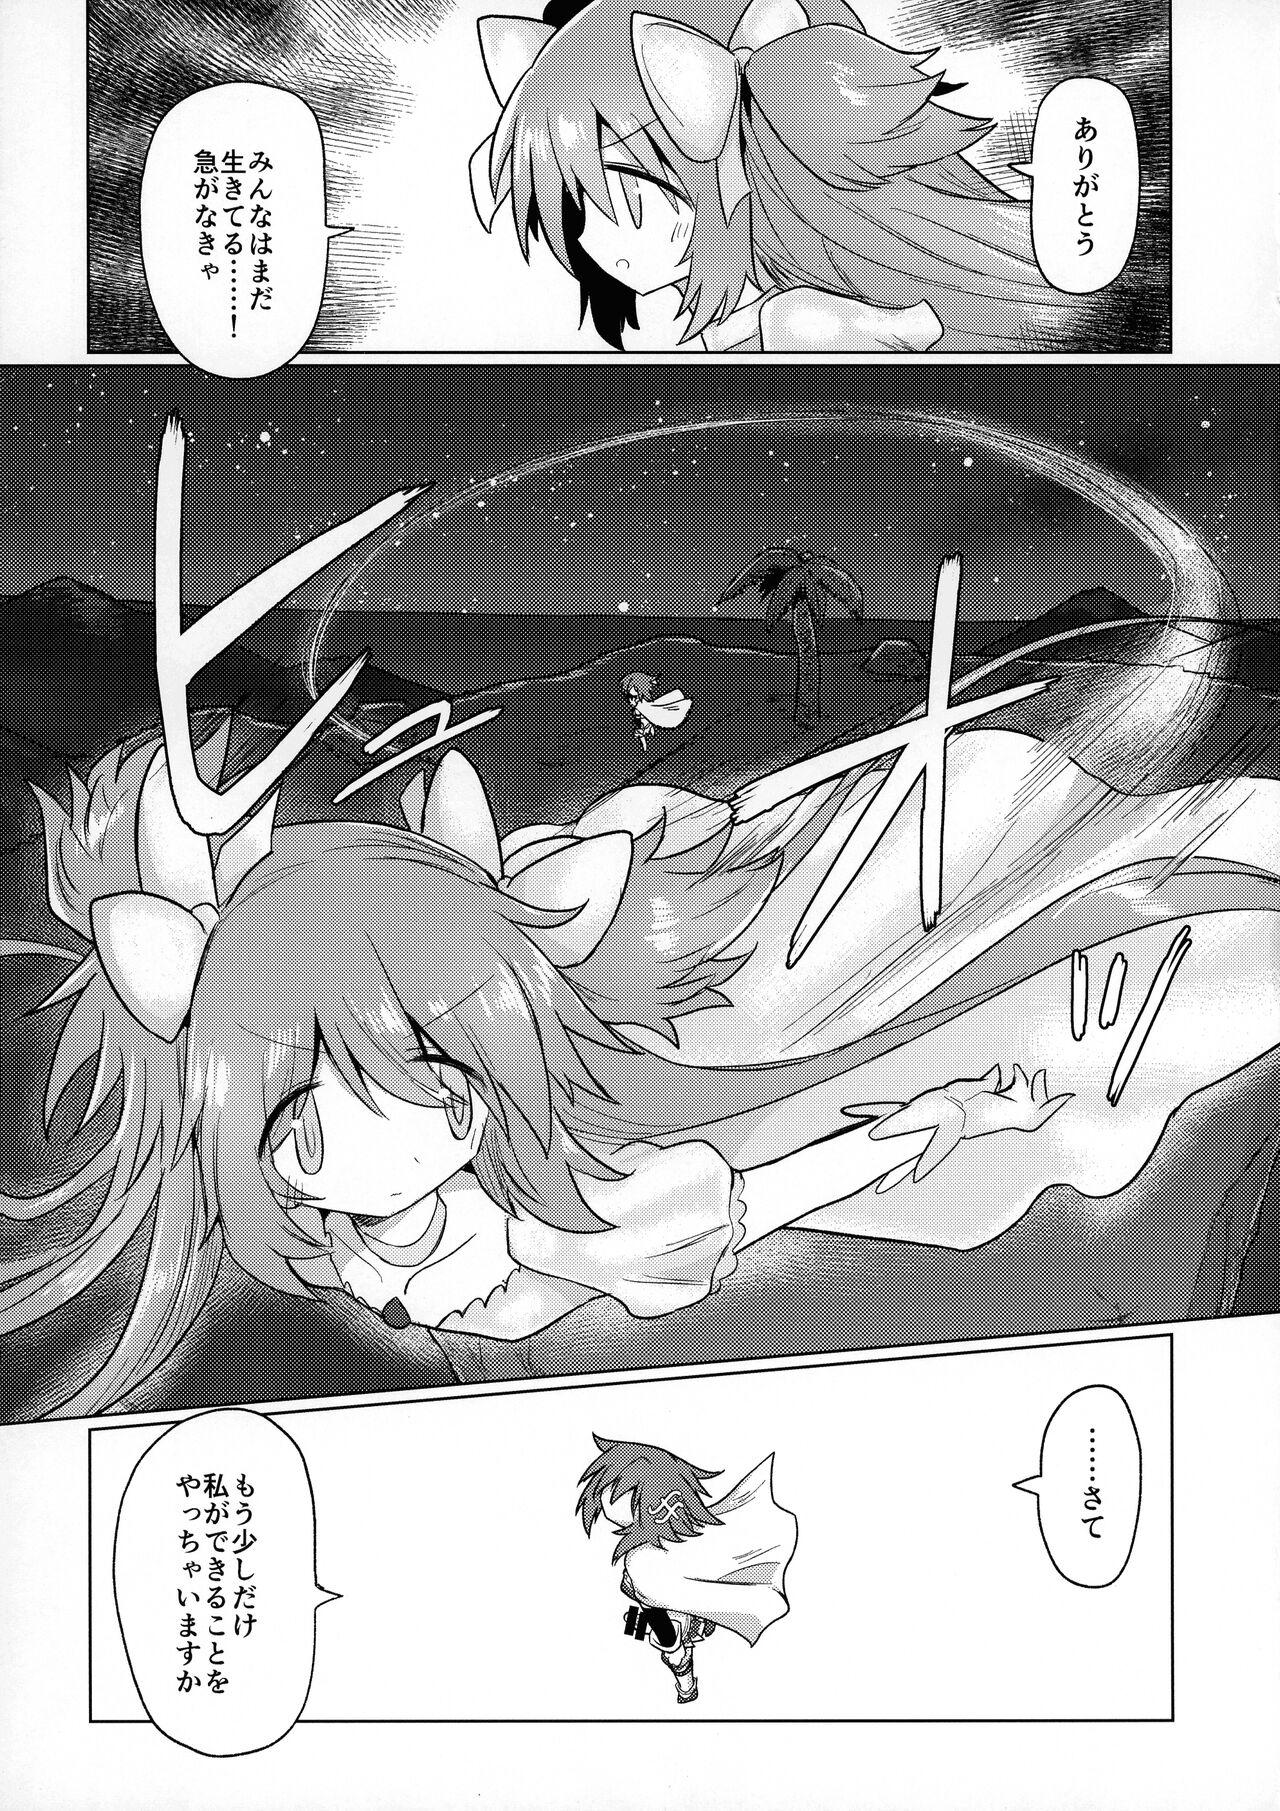 Stepbro Fellatiosaurus VS Mahou Shoujo Kouhen - Puella magi madoka magica Stretching - Page 11